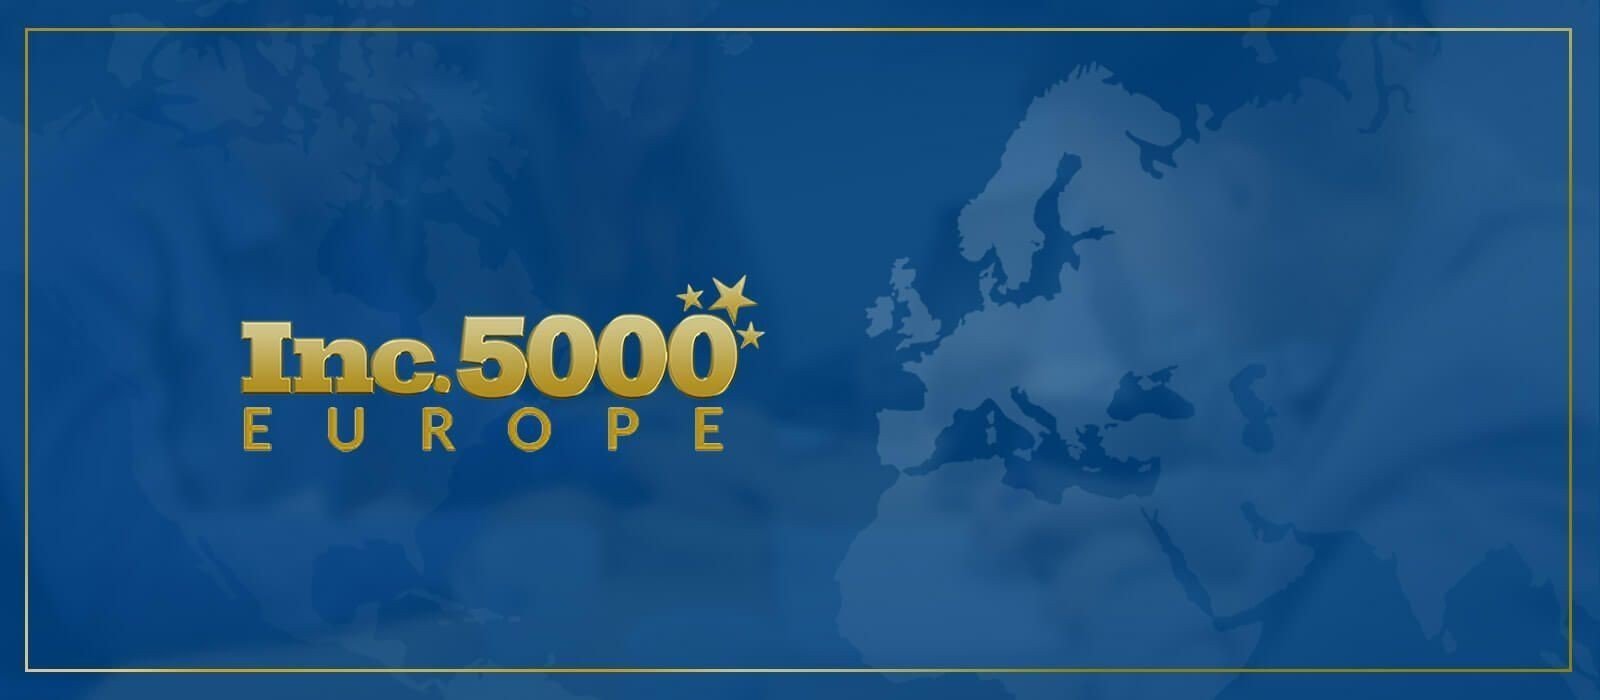 press room_5000_Europe 1